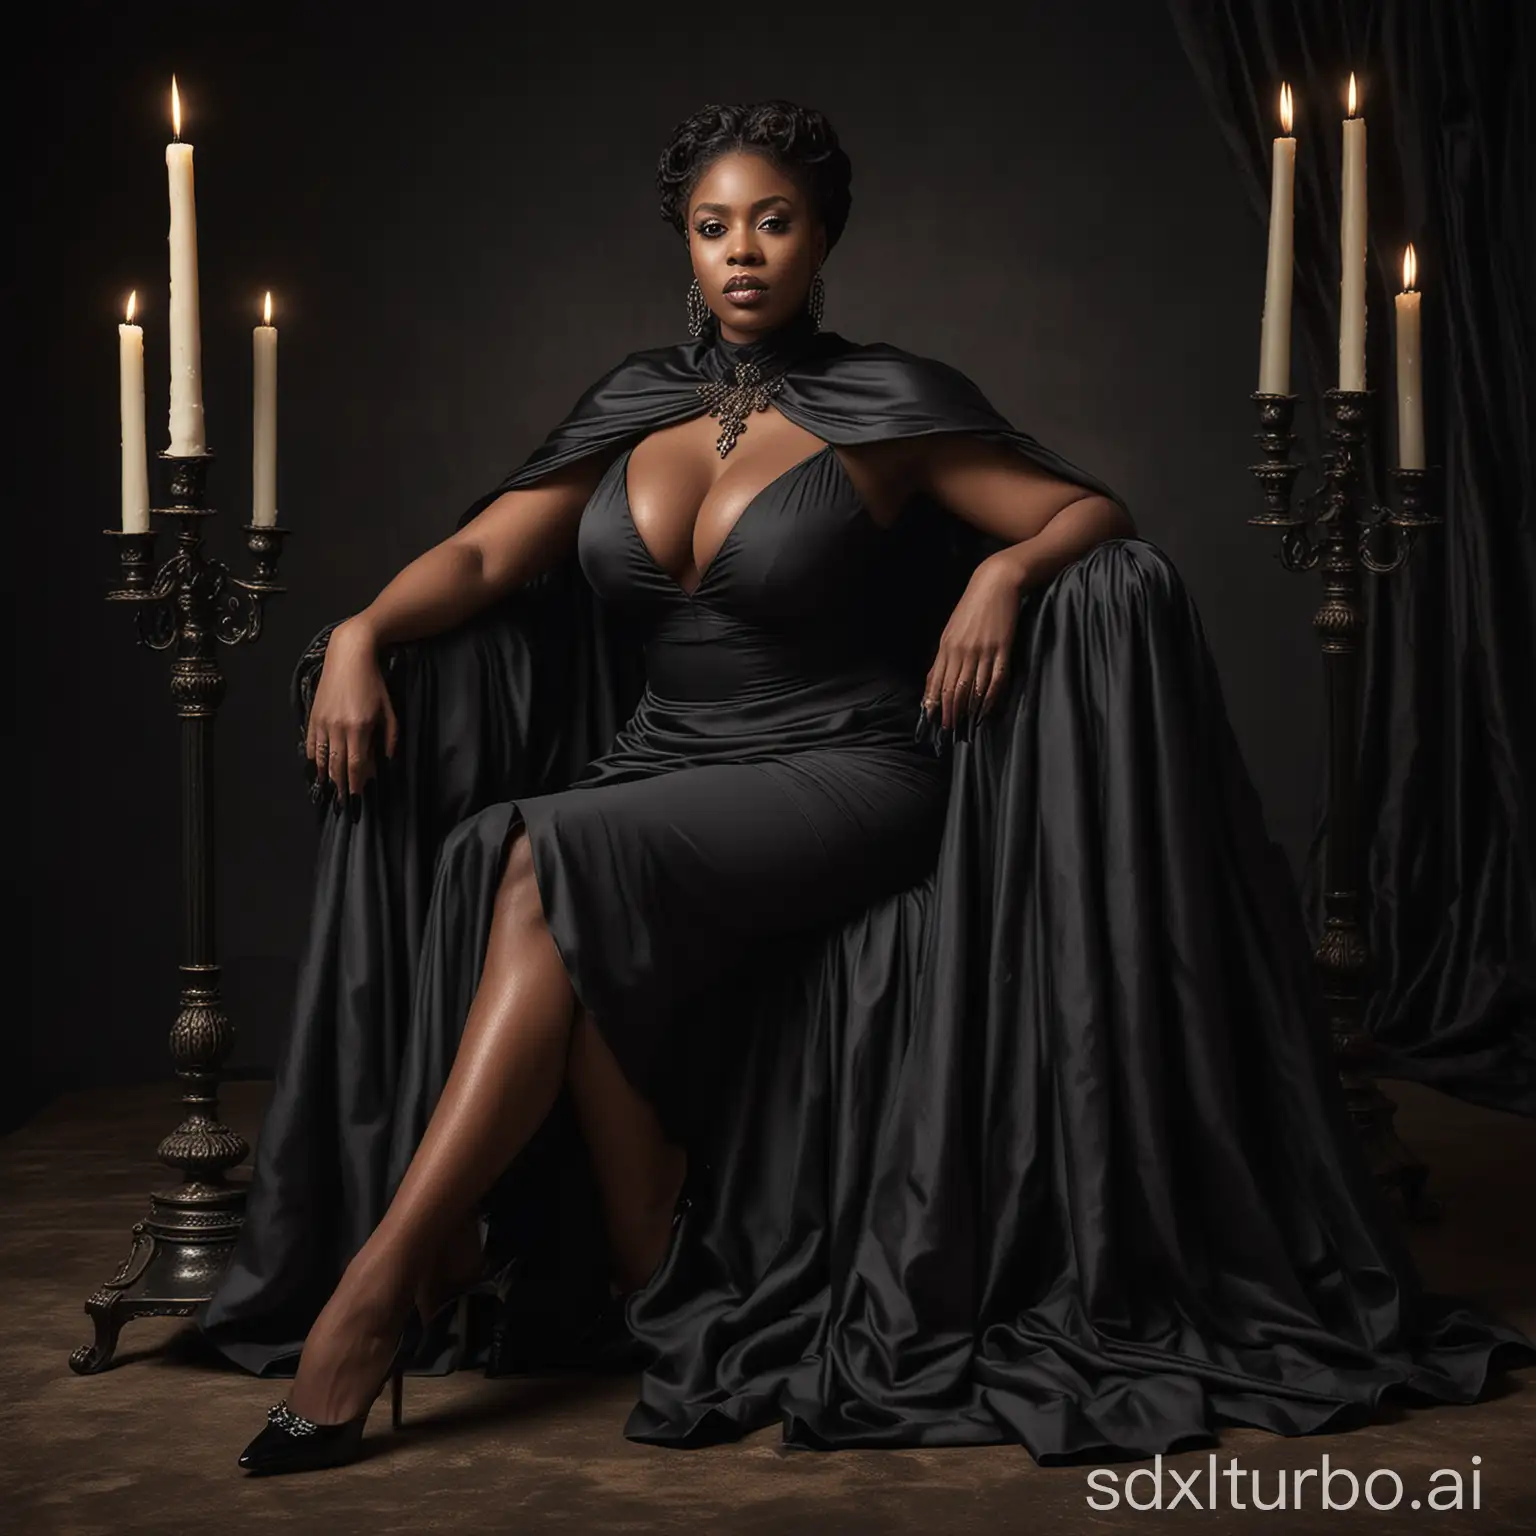 Majestic-Black-Queen-on-Throne-Powerful-Woman-in-Elegant-Attire